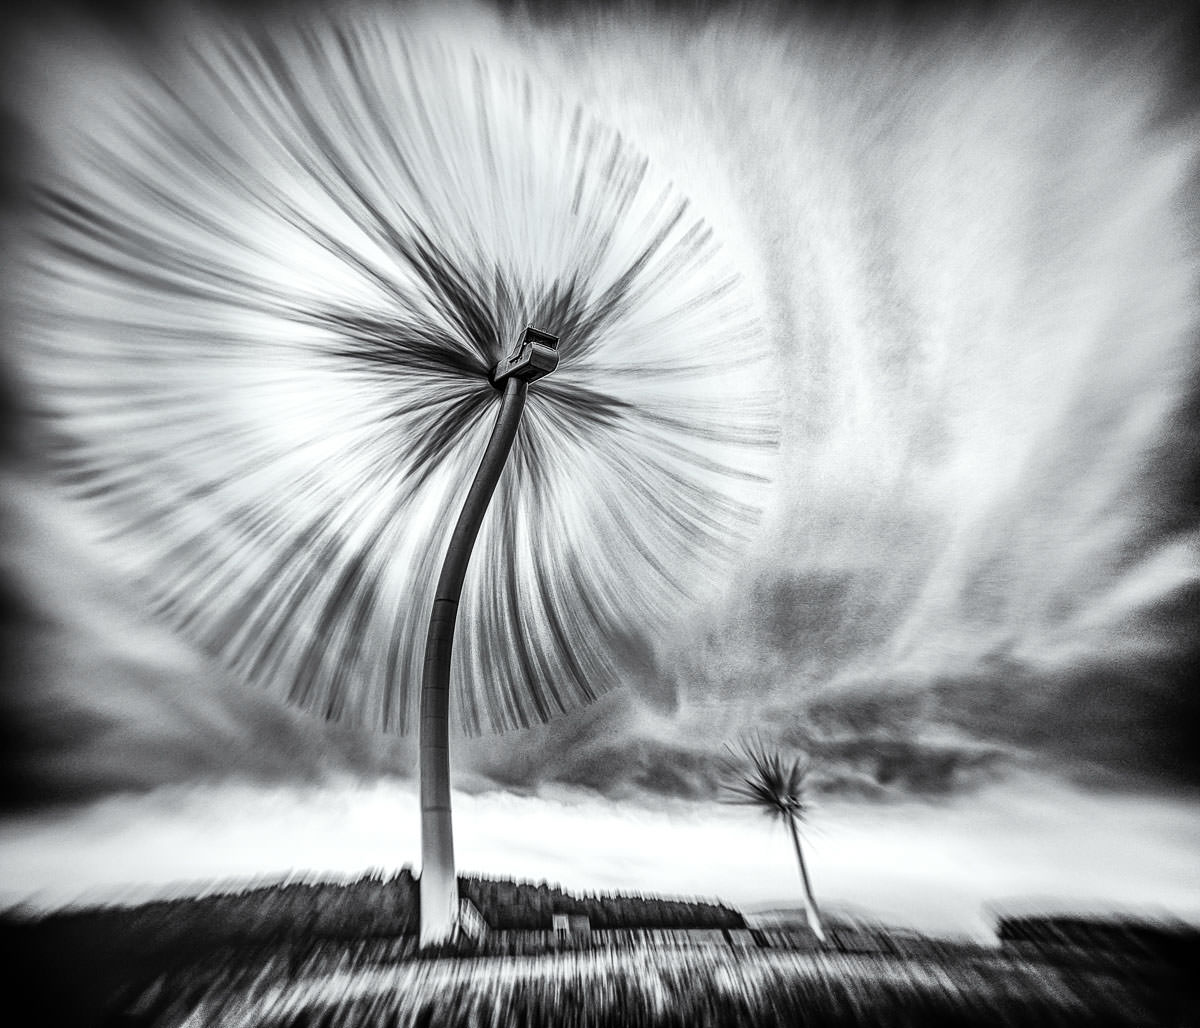 Surreal Image of a Turbo Dandelion Wind Farm